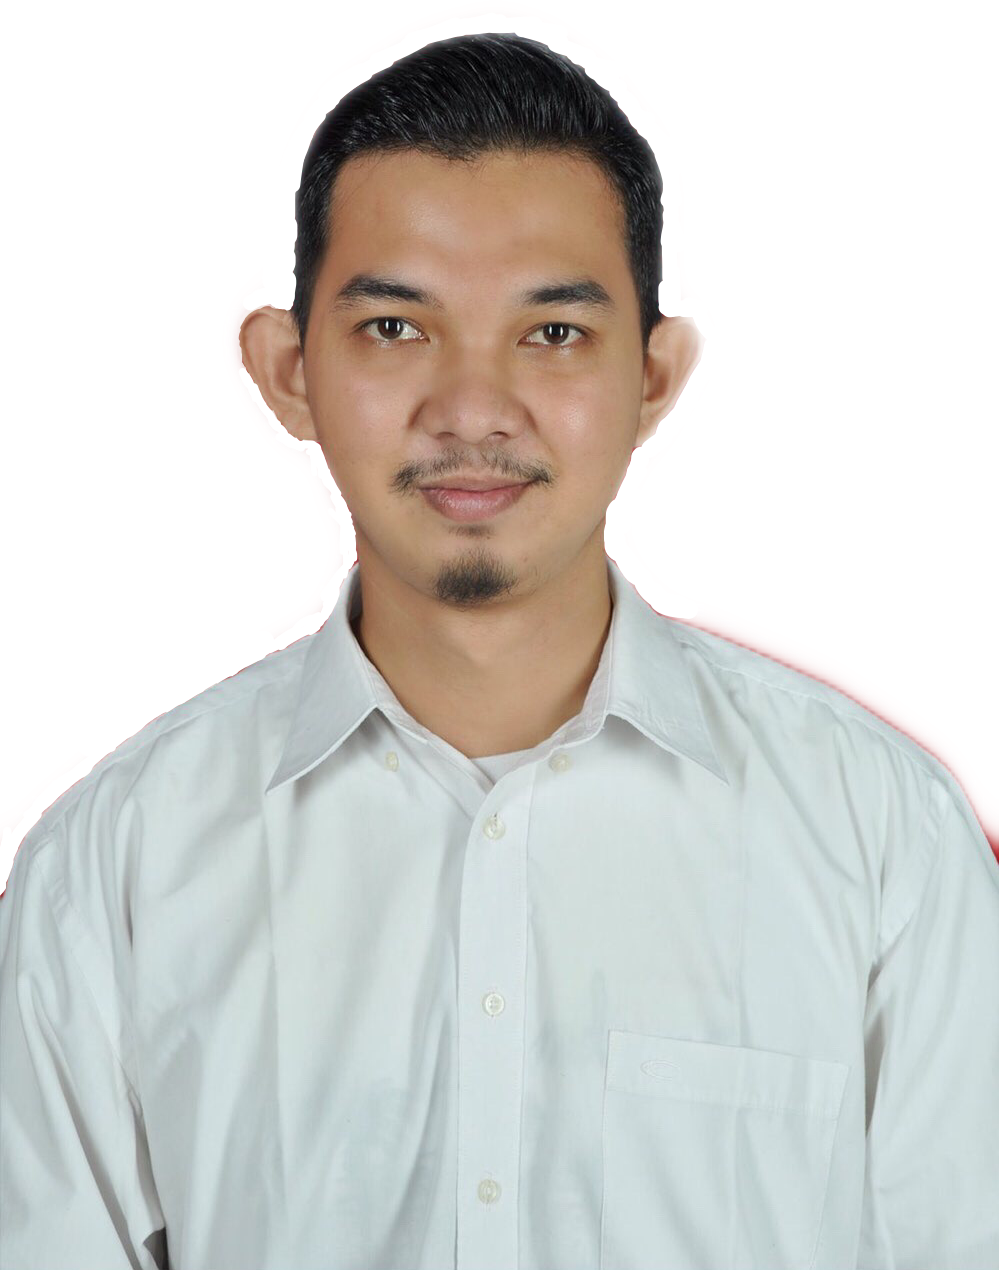 Ketua DPD FKBPPPN Kota Padang Sidempuan Meminta Kepatuhan Menpan RB Terhadap Konstitusi dan UU dalam Pengangkatan Polisi Pamong Praja Menjadi PNS